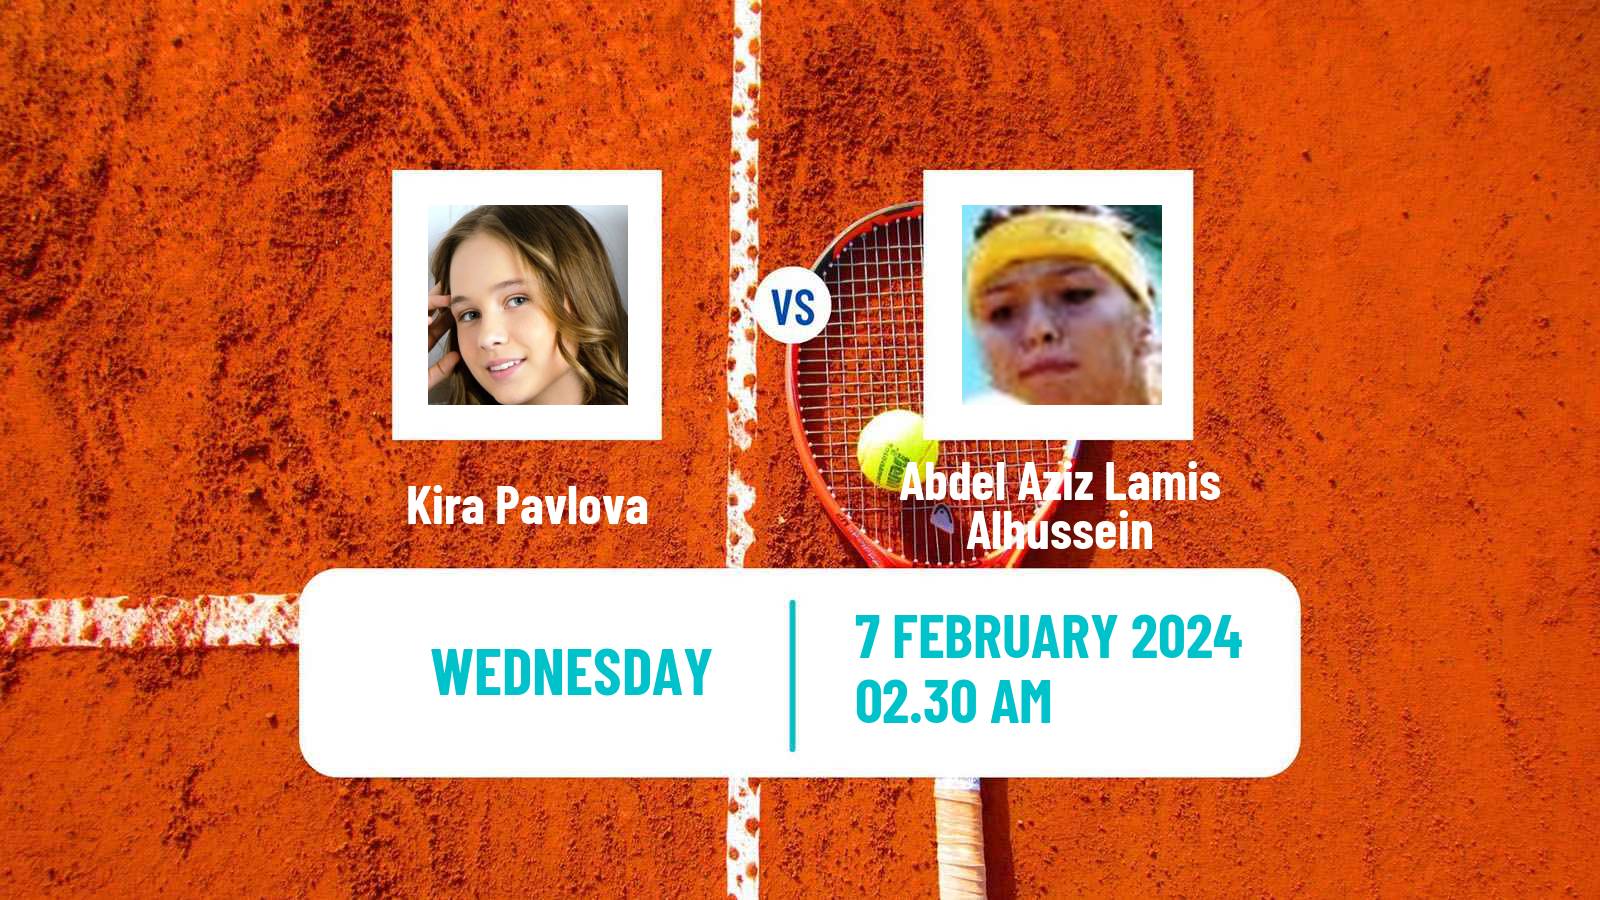 Tennis ITF W15 Sharm Elsheikh Women 2024 Kira Pavlova - Abdel Aziz Lamis Alhussein